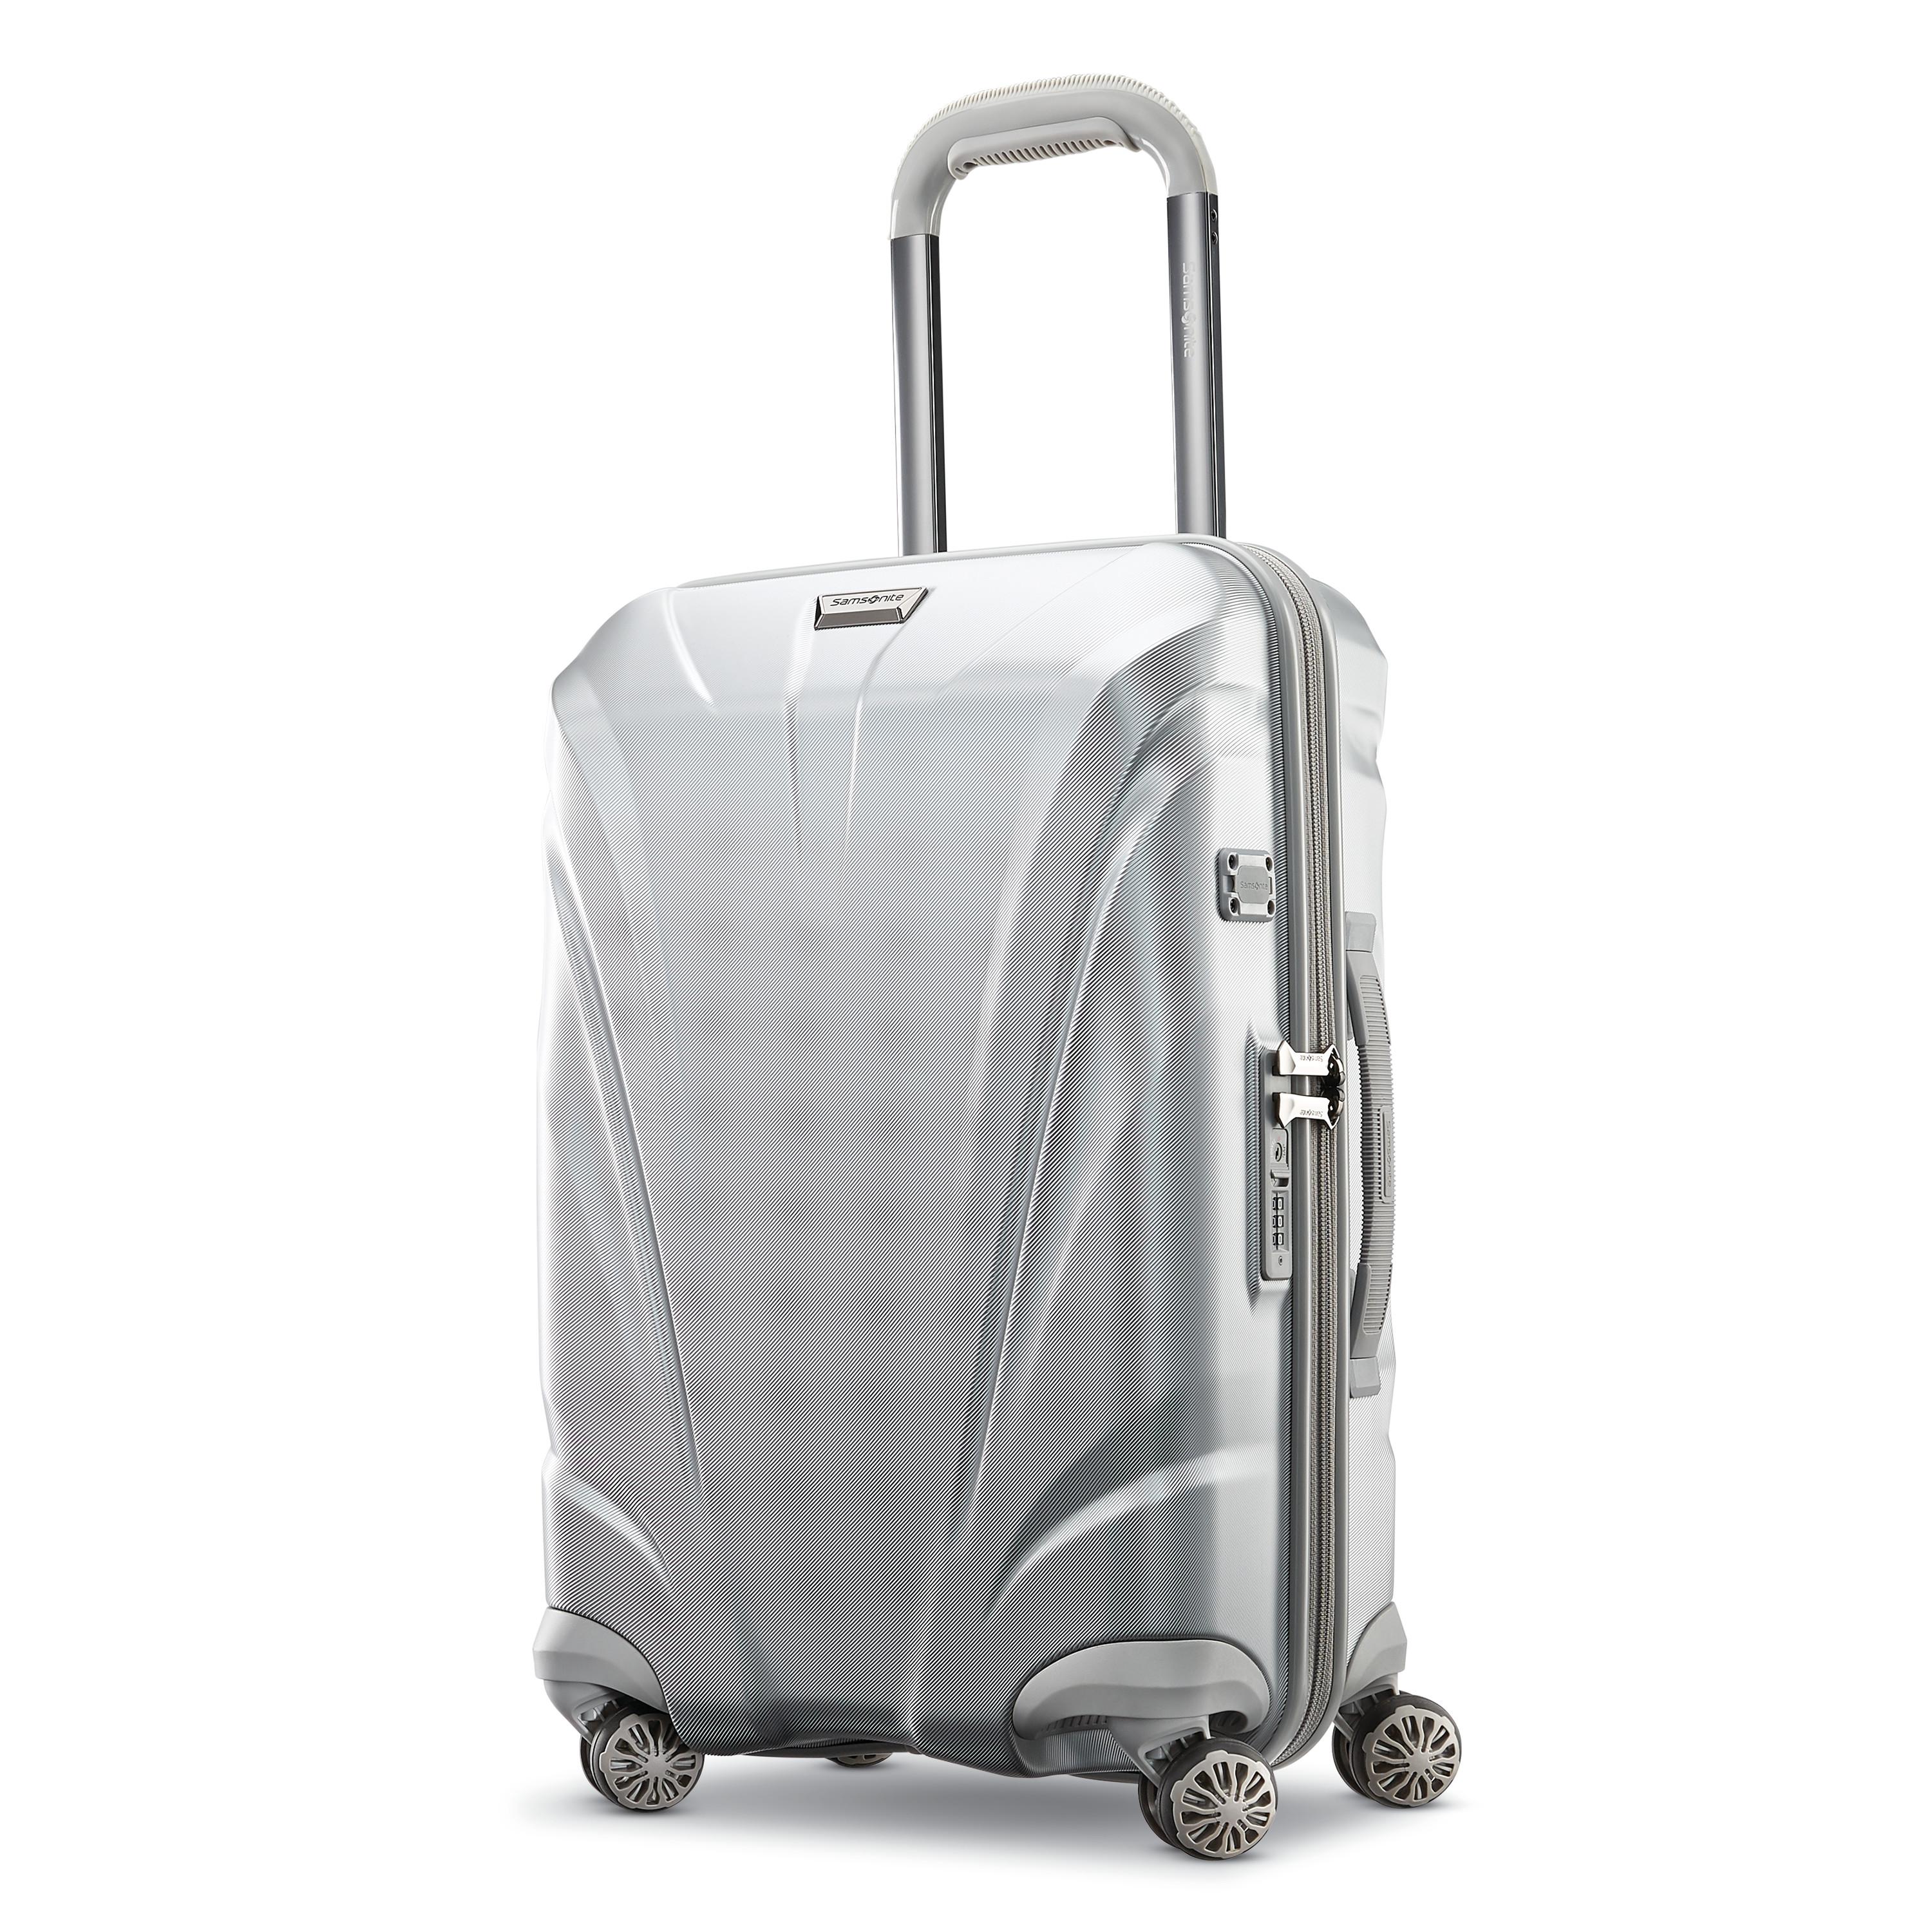 Samsonite Xcalibur XLT Carry-On Hardside Spinner Luggage for $84.99 Shipped